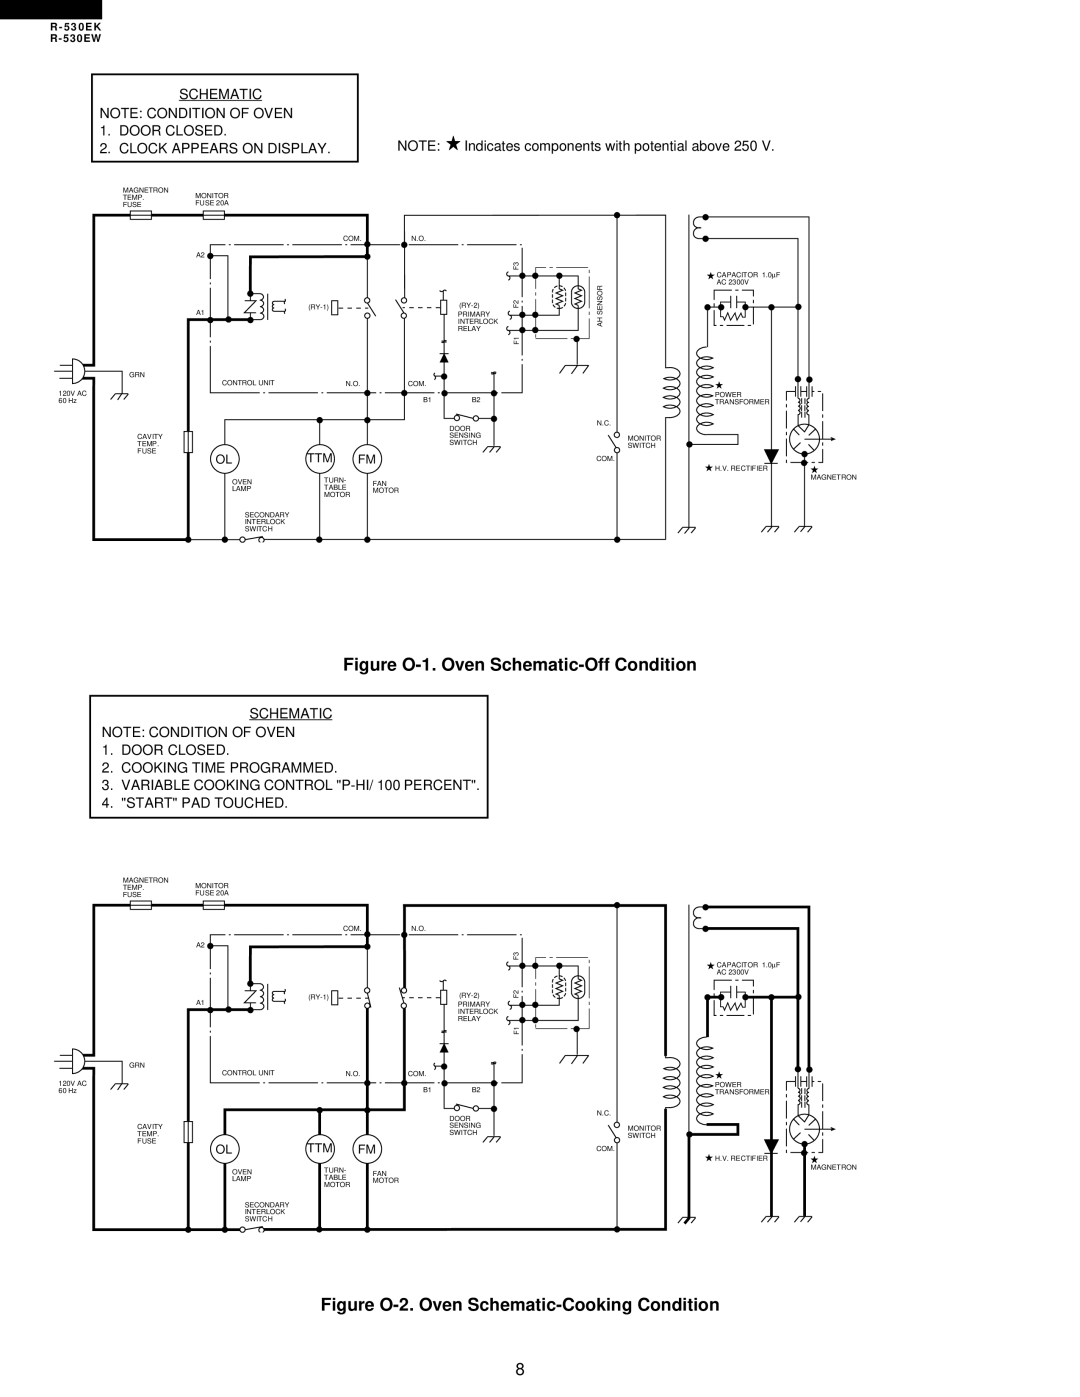 Sharp R-530EK service manual Figure O-1. Oven Schematic-Off Condition, Figure O-2. Oven Schematic-Cooking Condition 